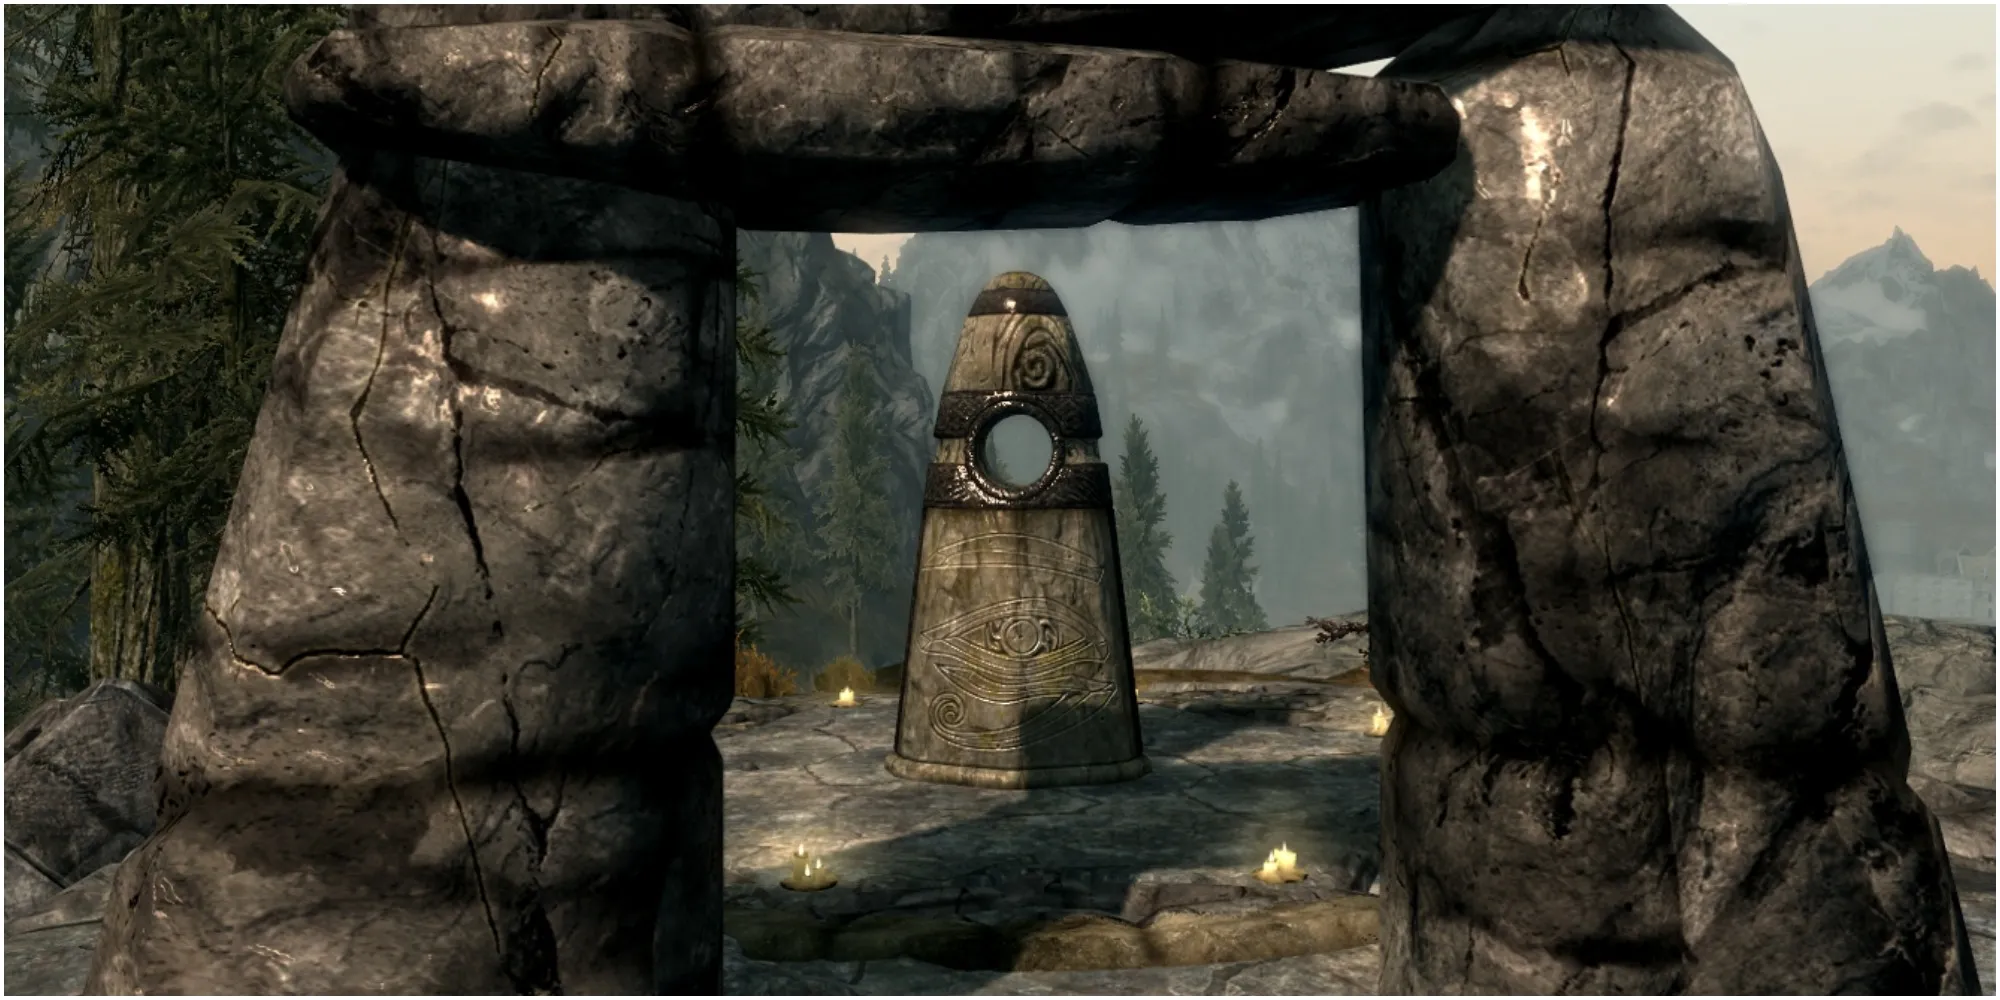 The Ritual Standing Stone in Skyrim